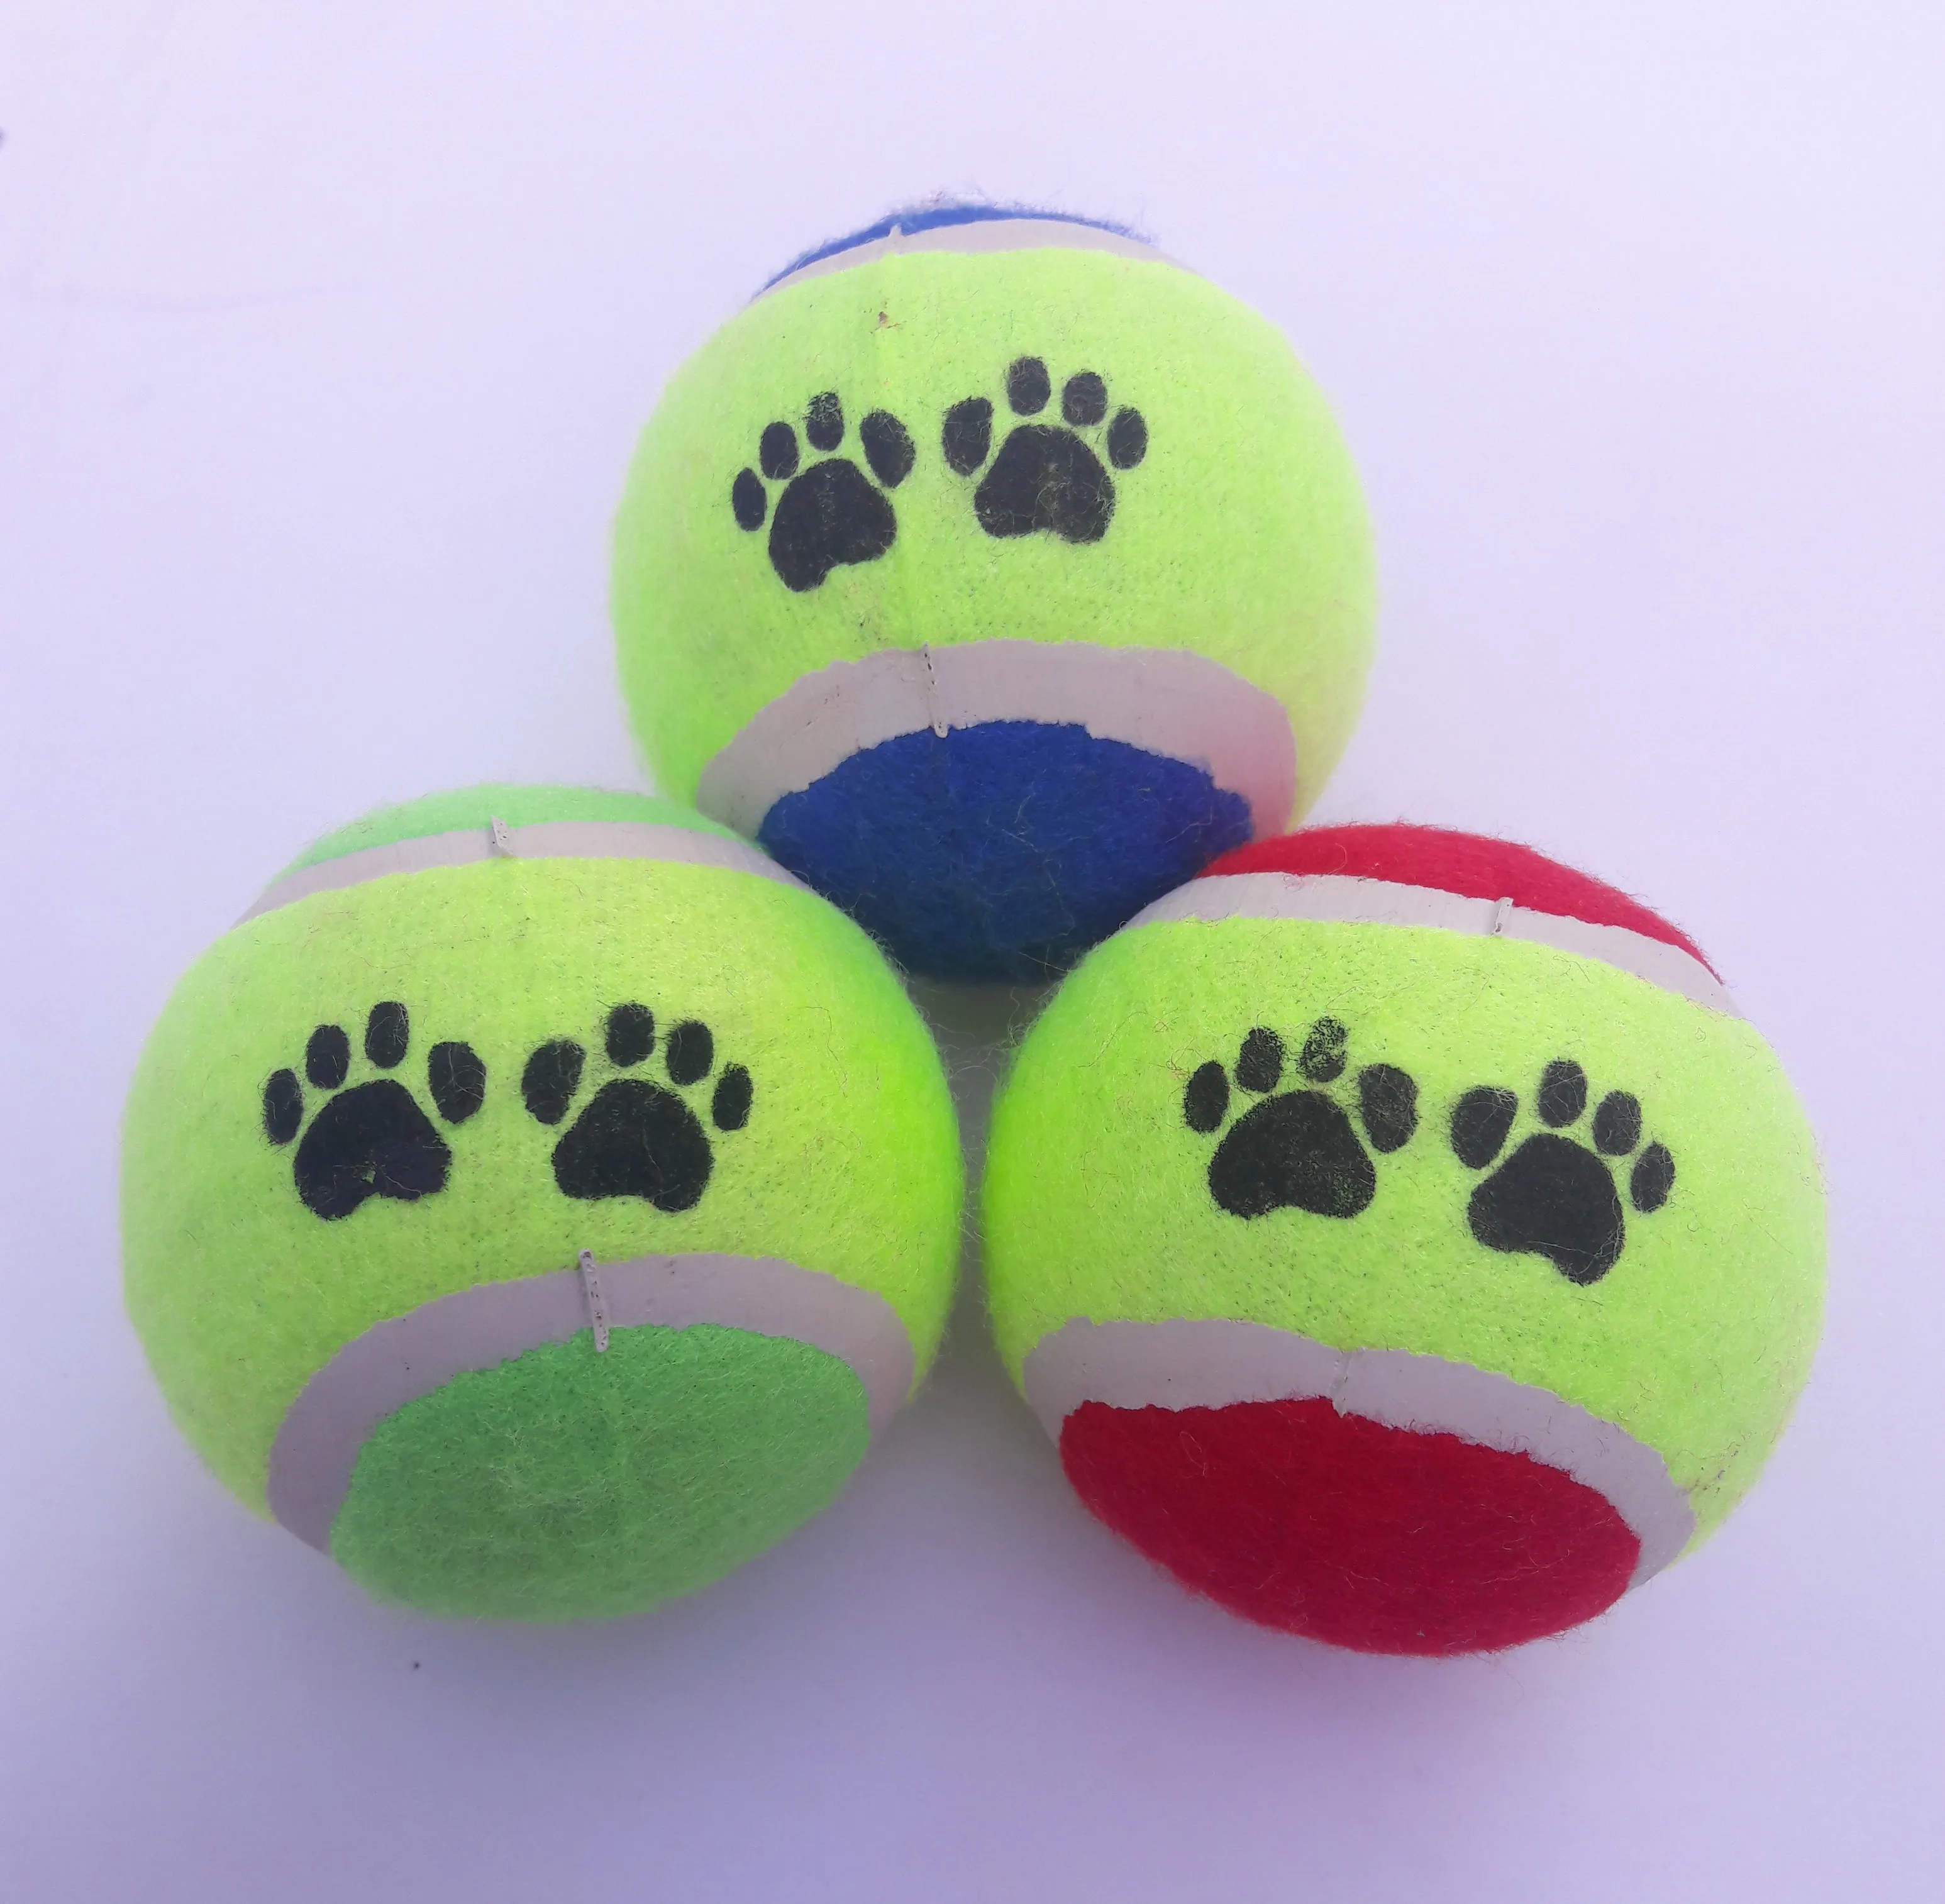 Tennis Balls Ball Games Dog Pet Toy Pets Bouncing Sports Outdoor Games Fun Throw